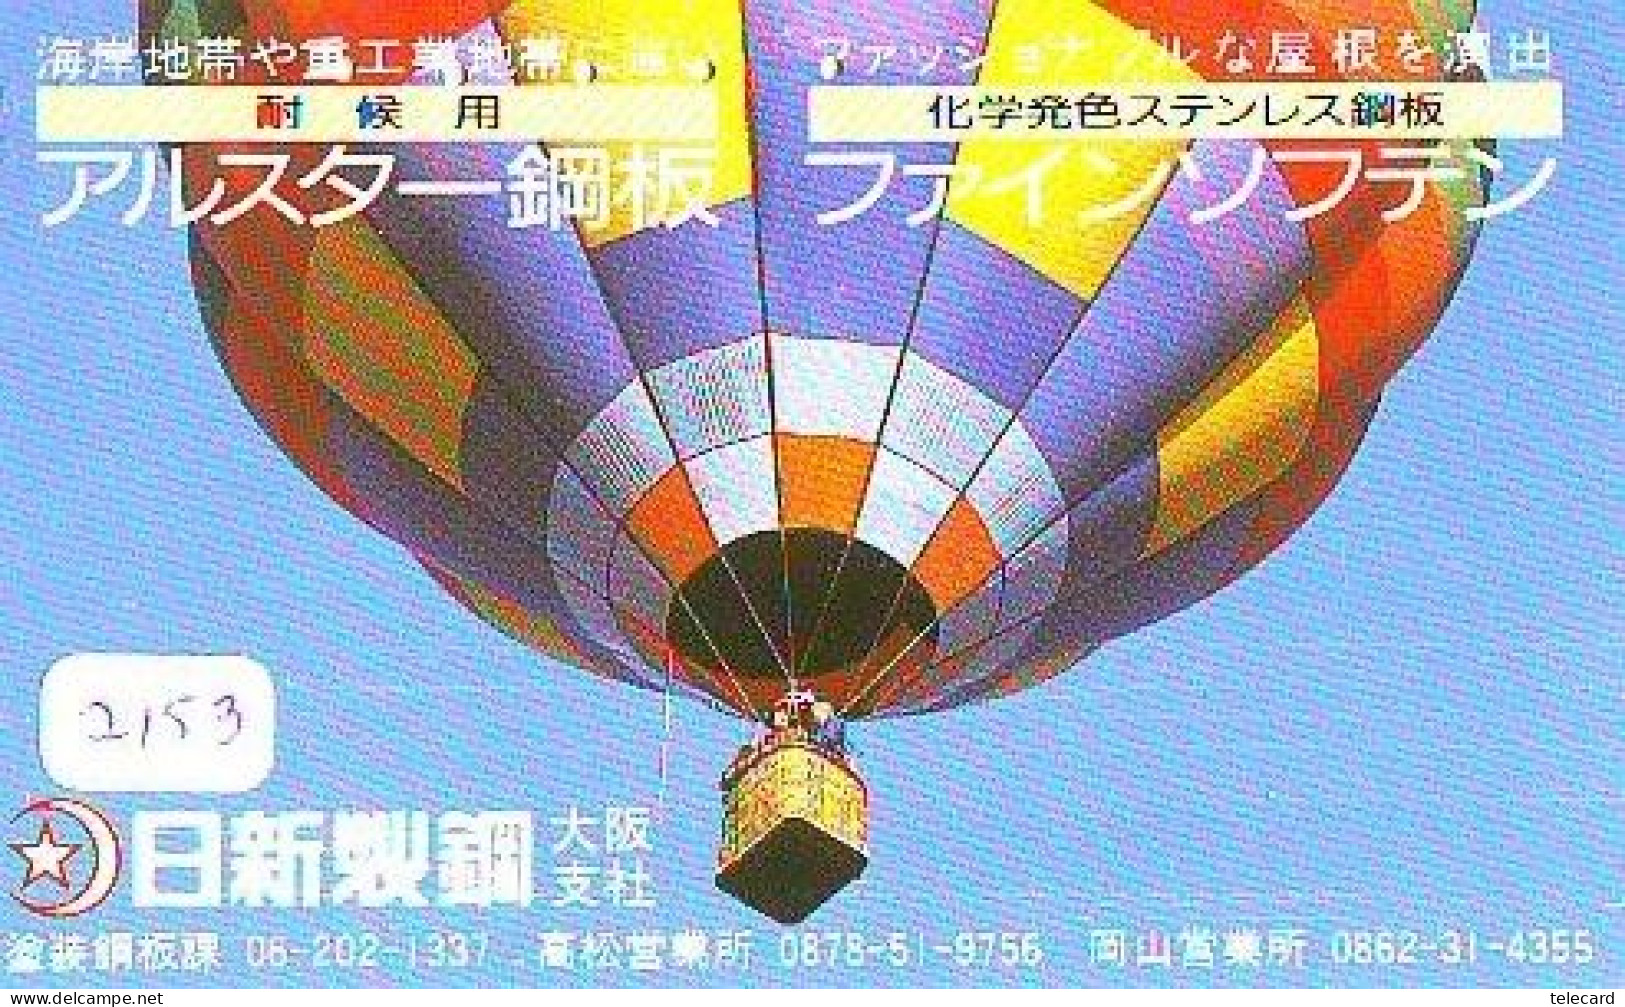 Telecarte JAPON * (2153) BALLON * MONTGOLFIERE - Hot Air Balloon * Aerostato * Heißluft PHONECARD JAPAN - - Deportes